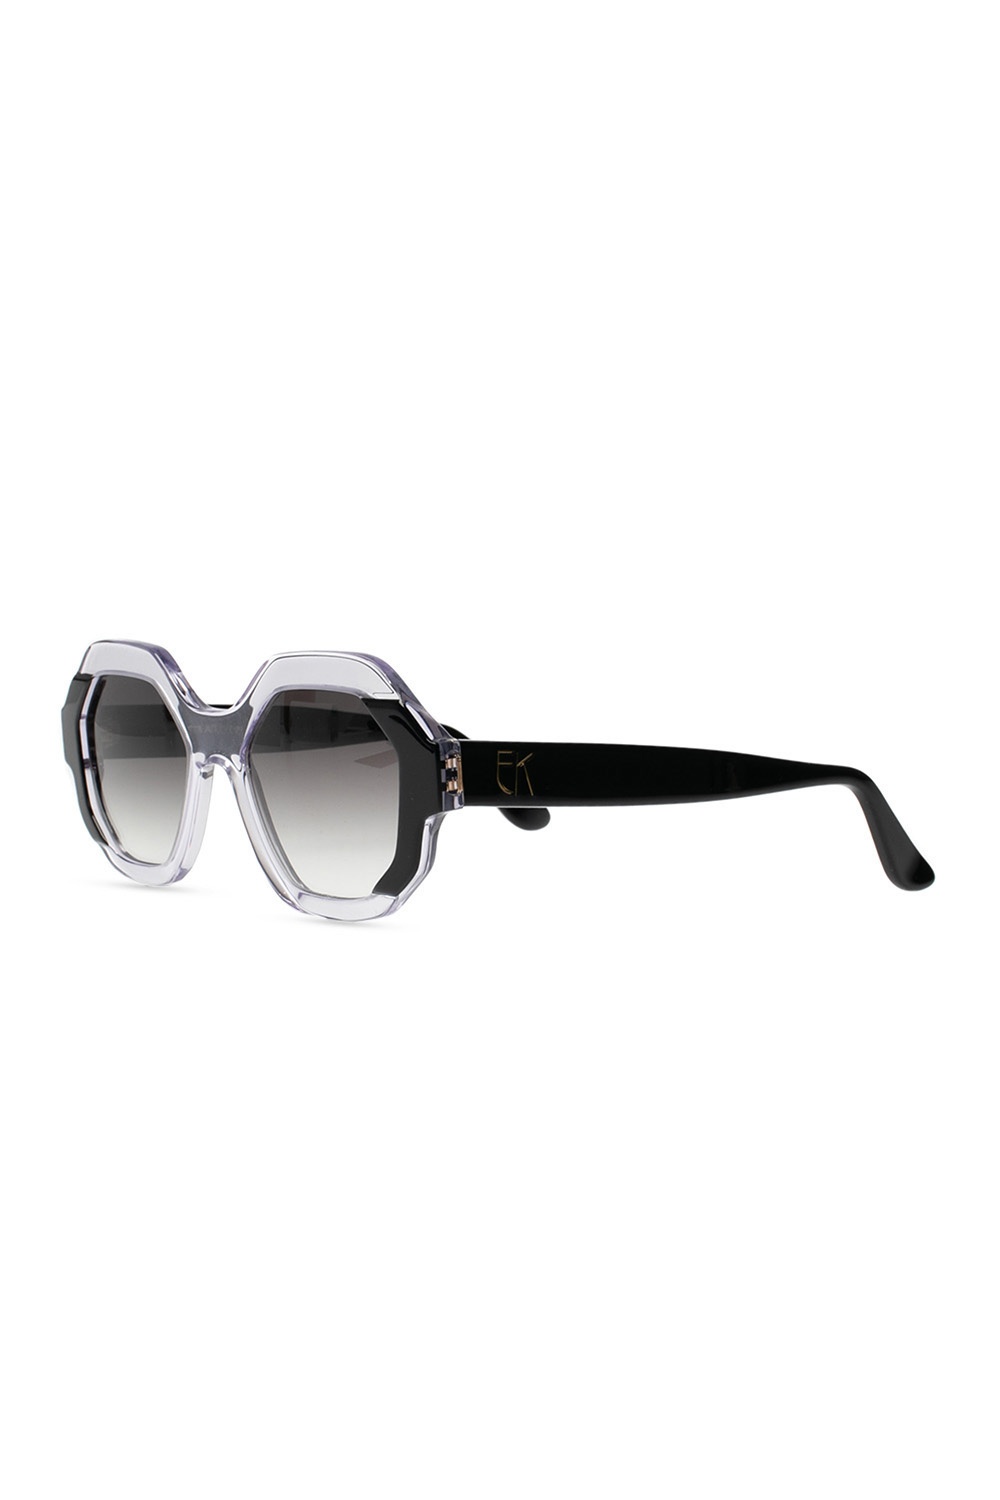 Emmanuelle Khanh new wayfarer classic sunglasses crystal grey gradient lens